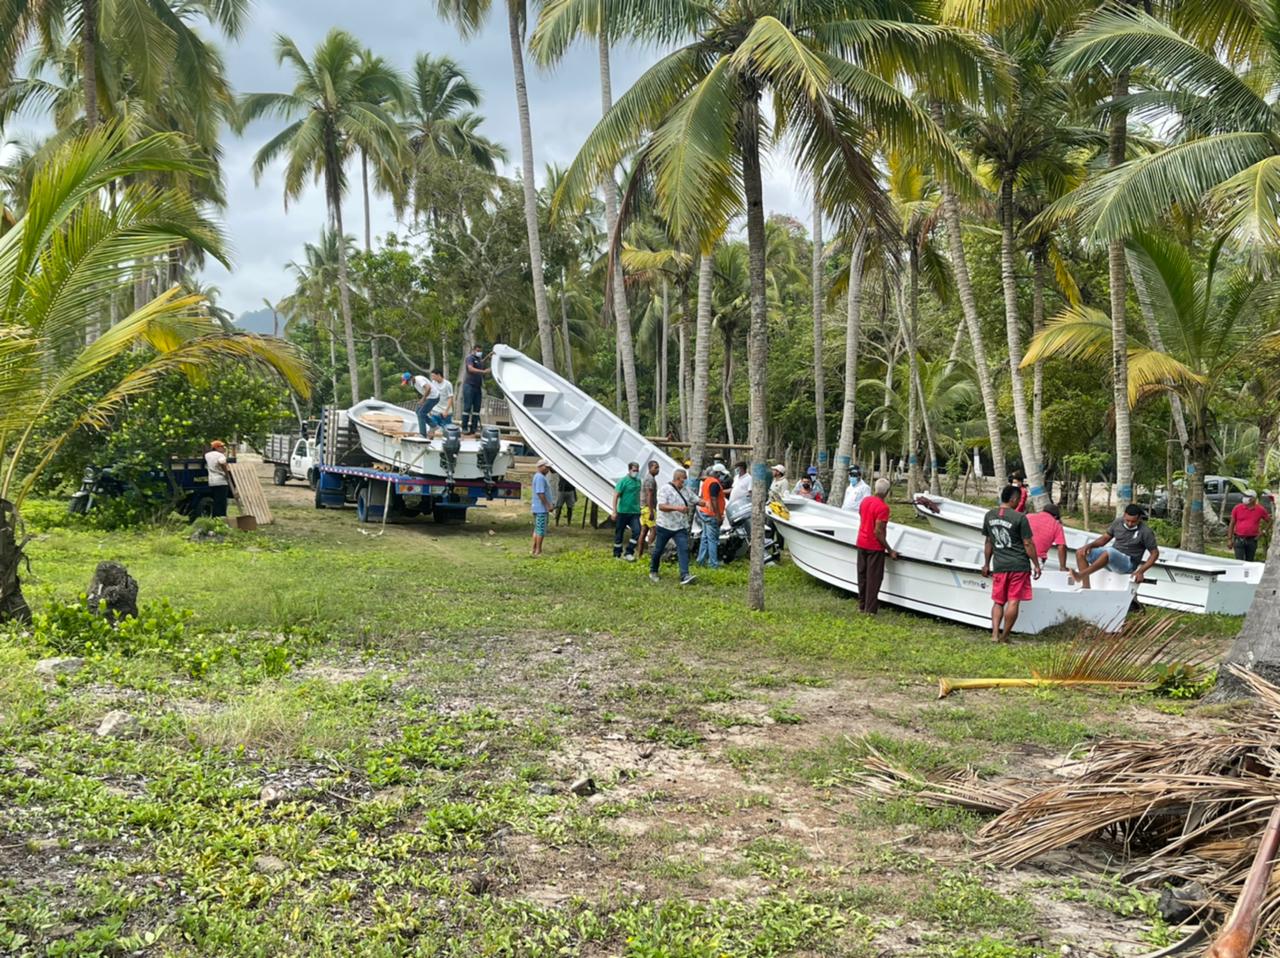 Agencia de Desarrollo Rural entregó 10 lanchas a comunidades pesqueras del Magdalena